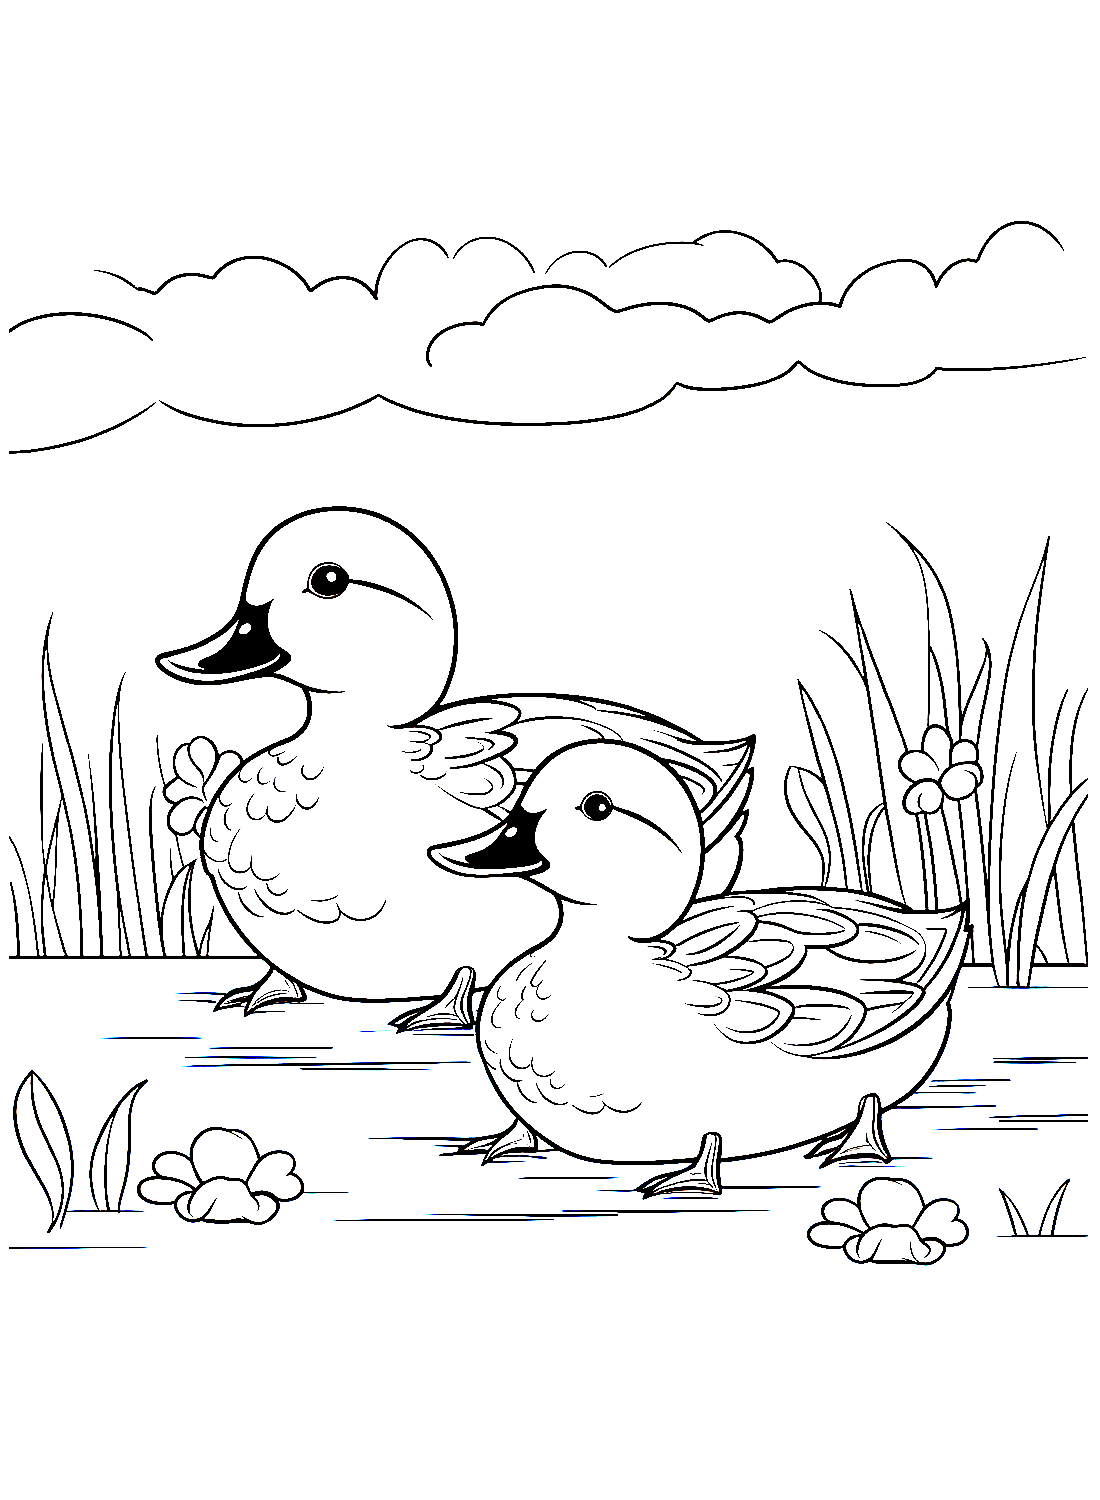 Printable Ducklings from Duckling